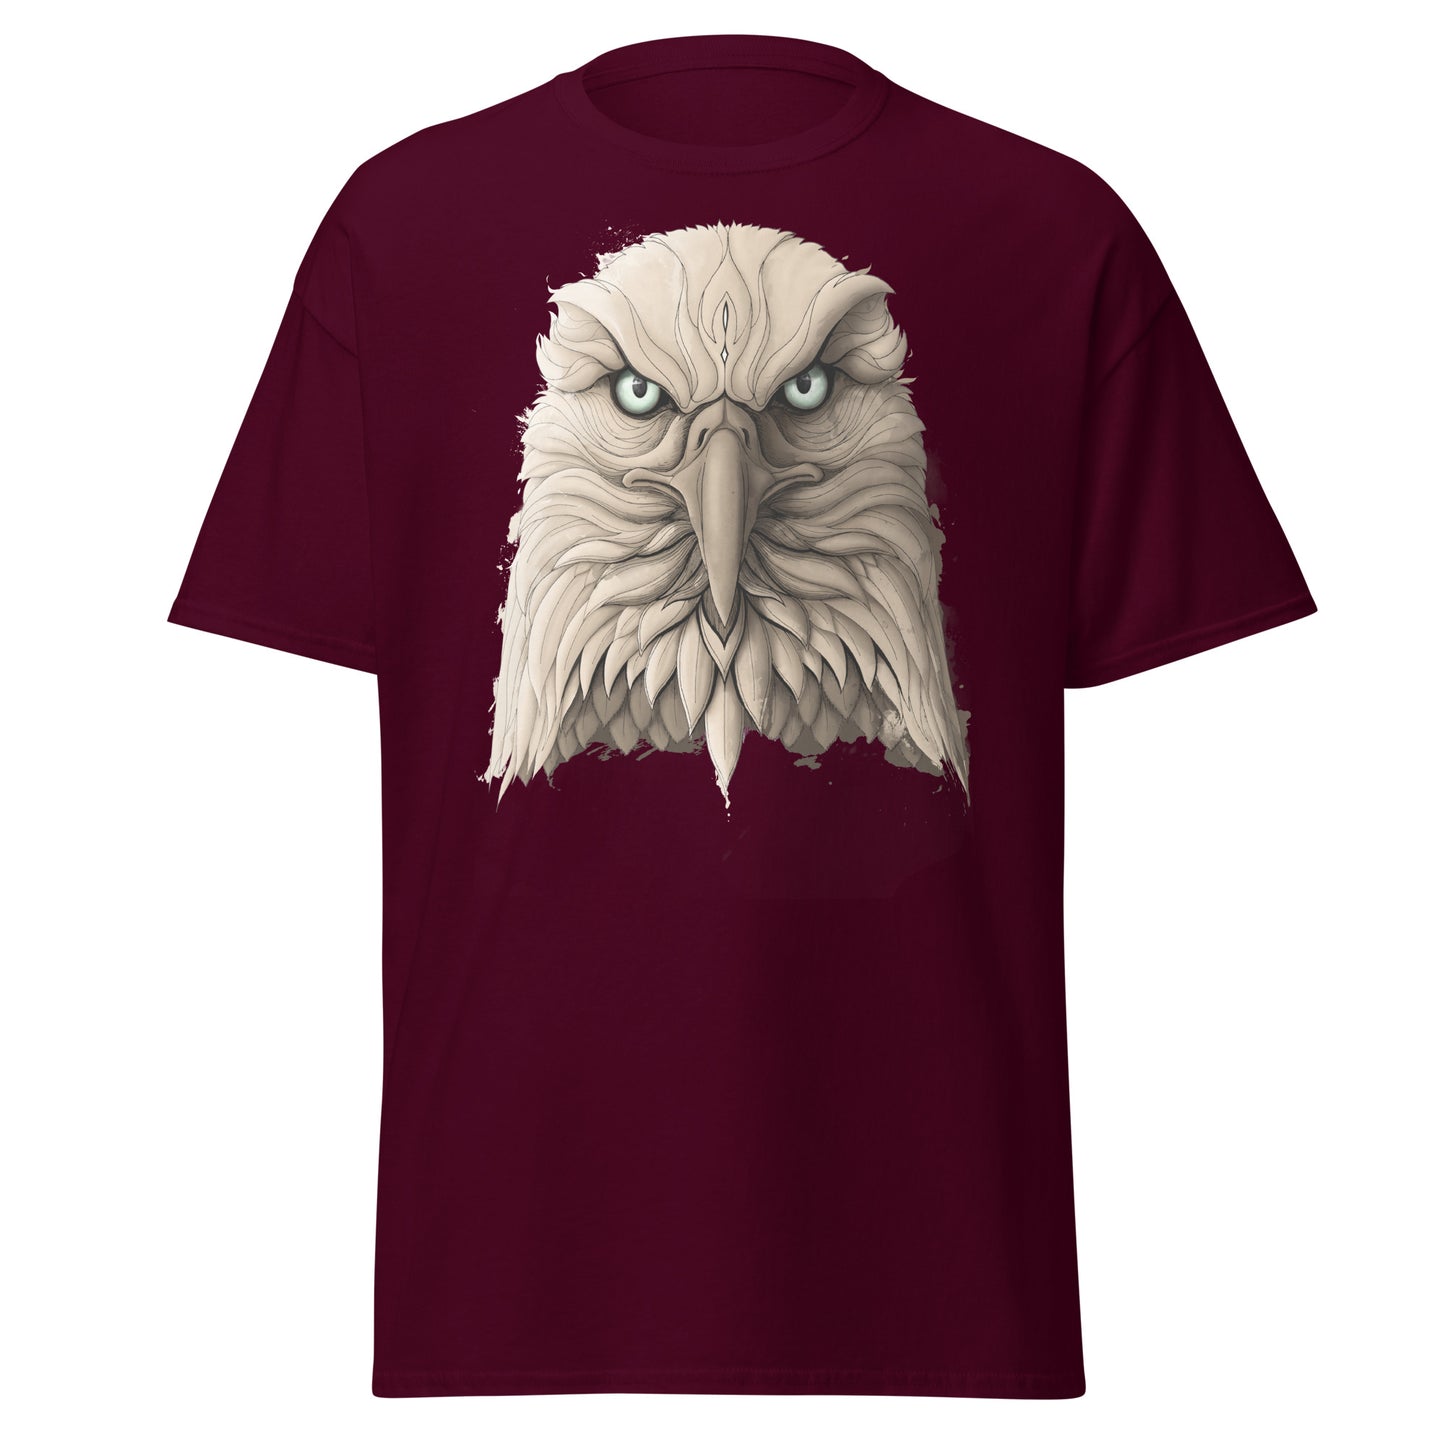 The Eagle T-shirt